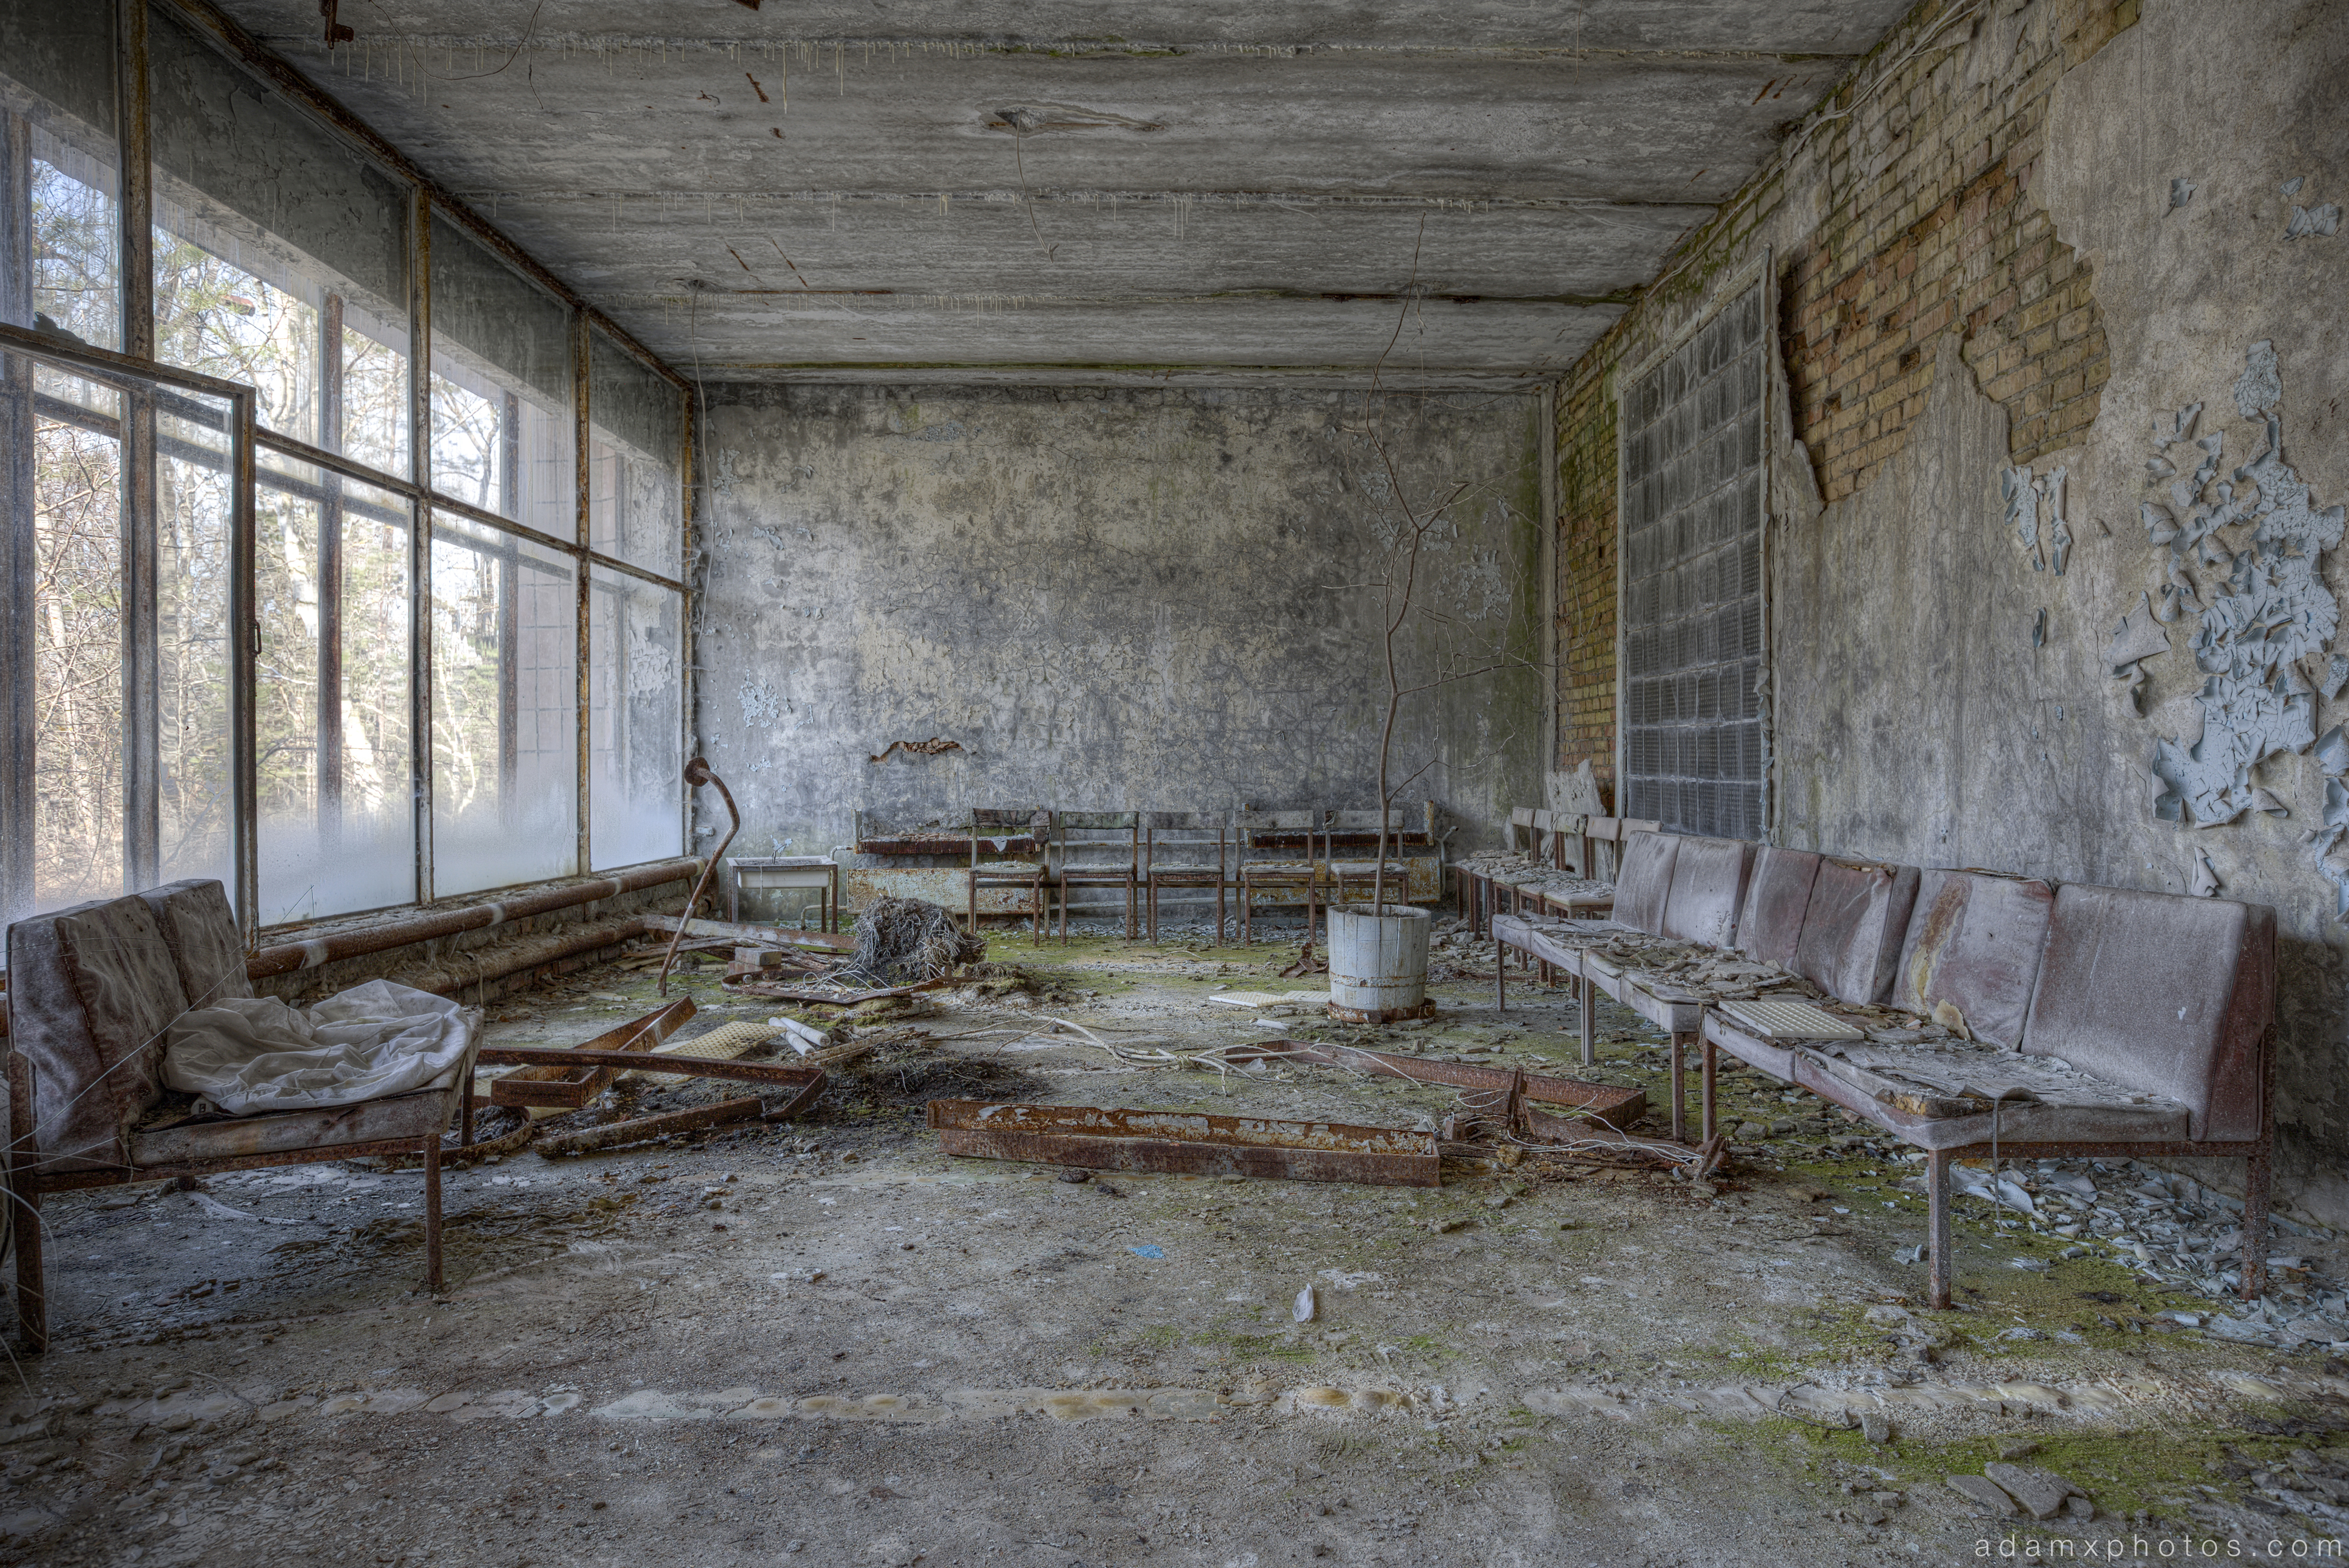 lobby reception waiting area Hospital 126 Chernobyl Pripyat Urbex Adam X Urban Exploration 2015 Abandoned decay lost forgotten derelict